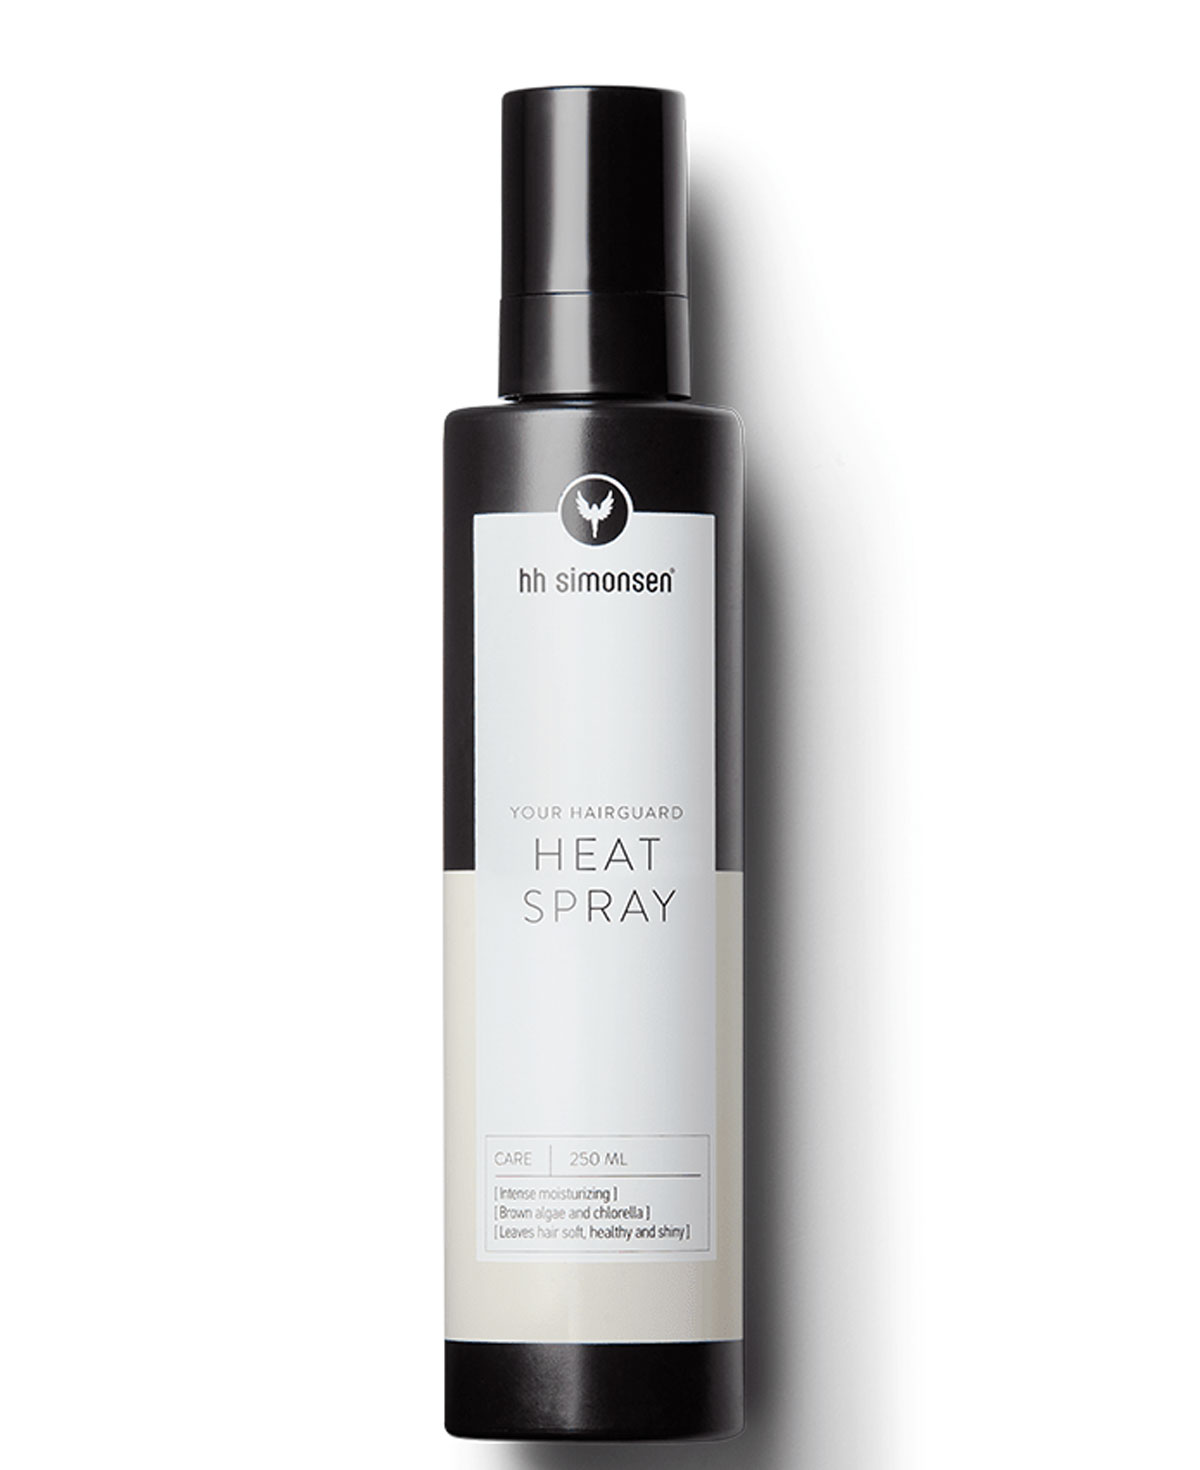 HH Simonsen Heat Protection Spray 145ml